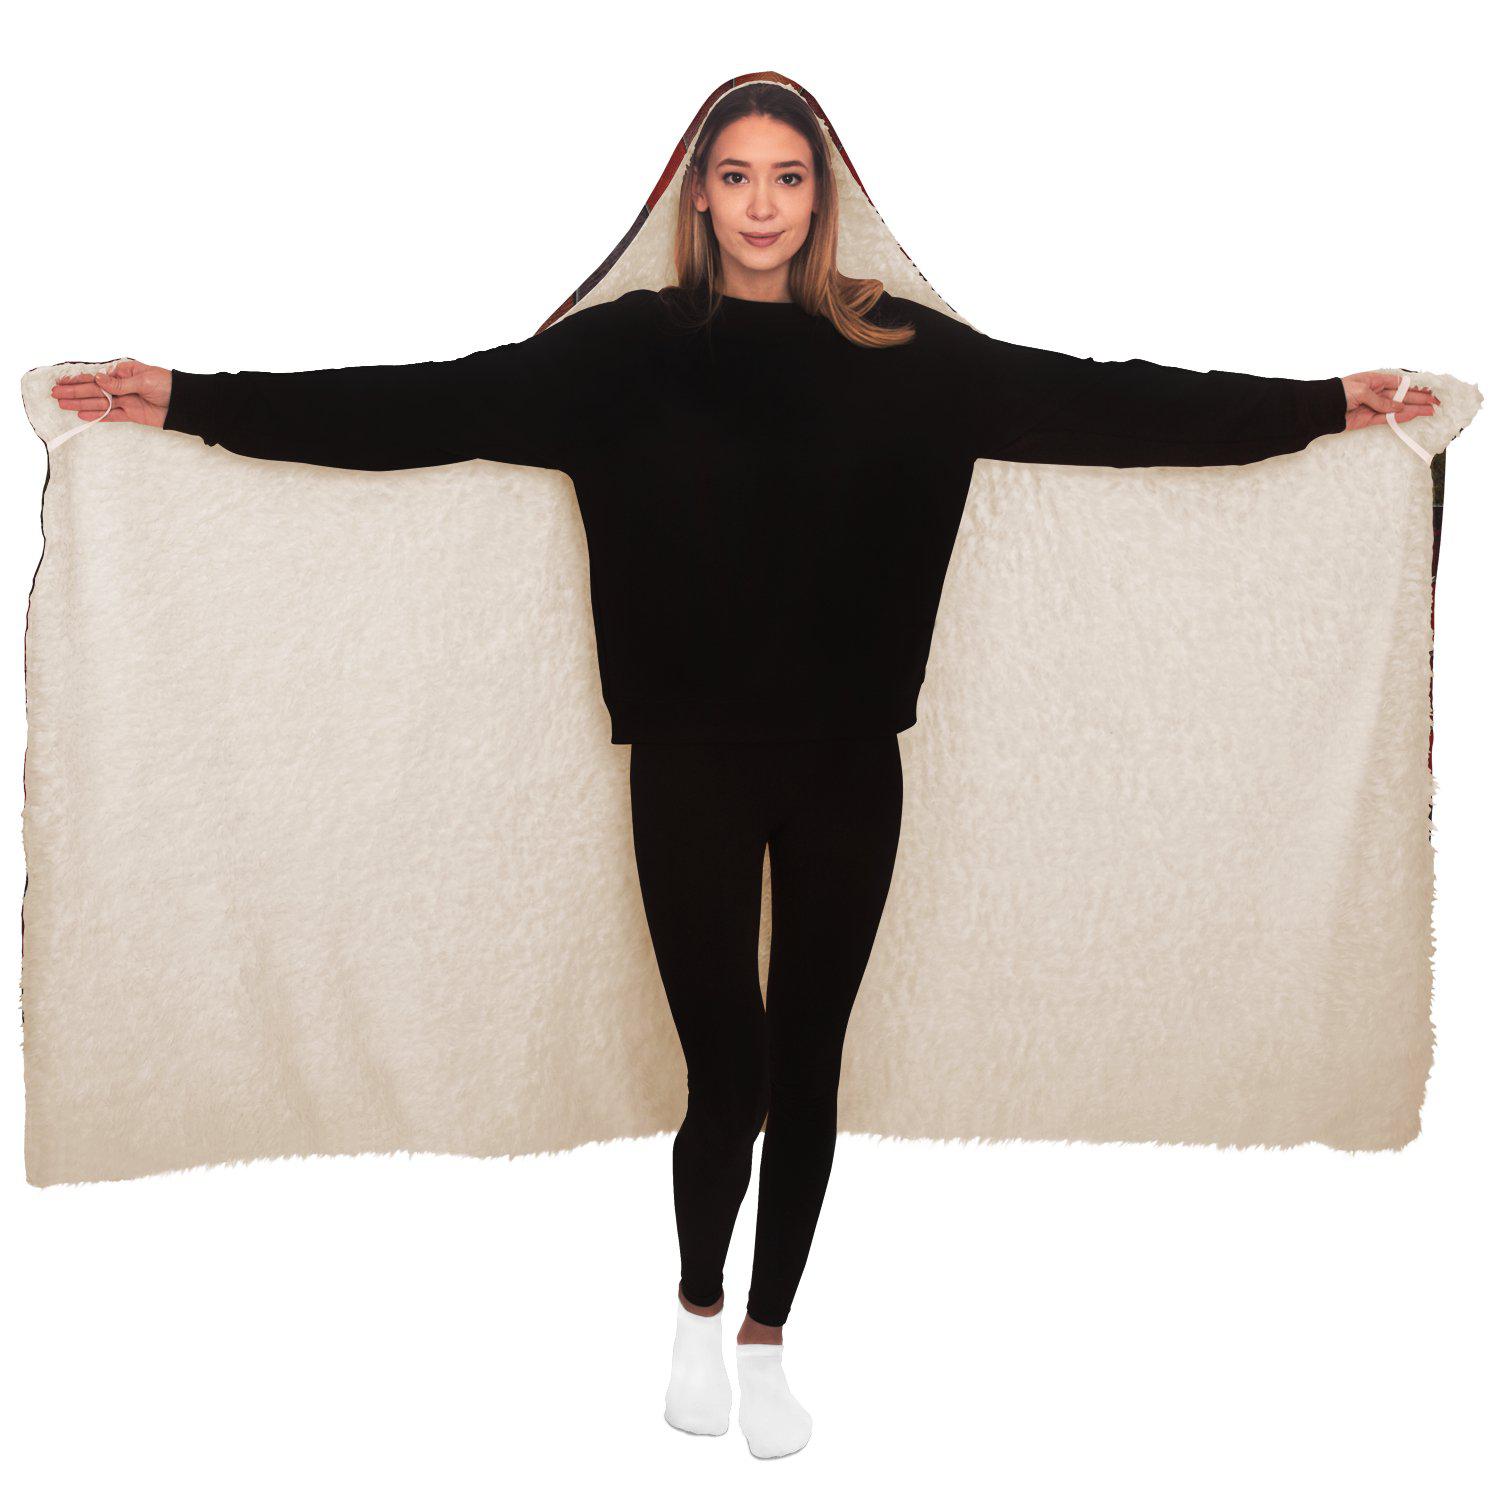 Hooded Blanket - AOP Earth Tones Contemporary Hooded Blanket